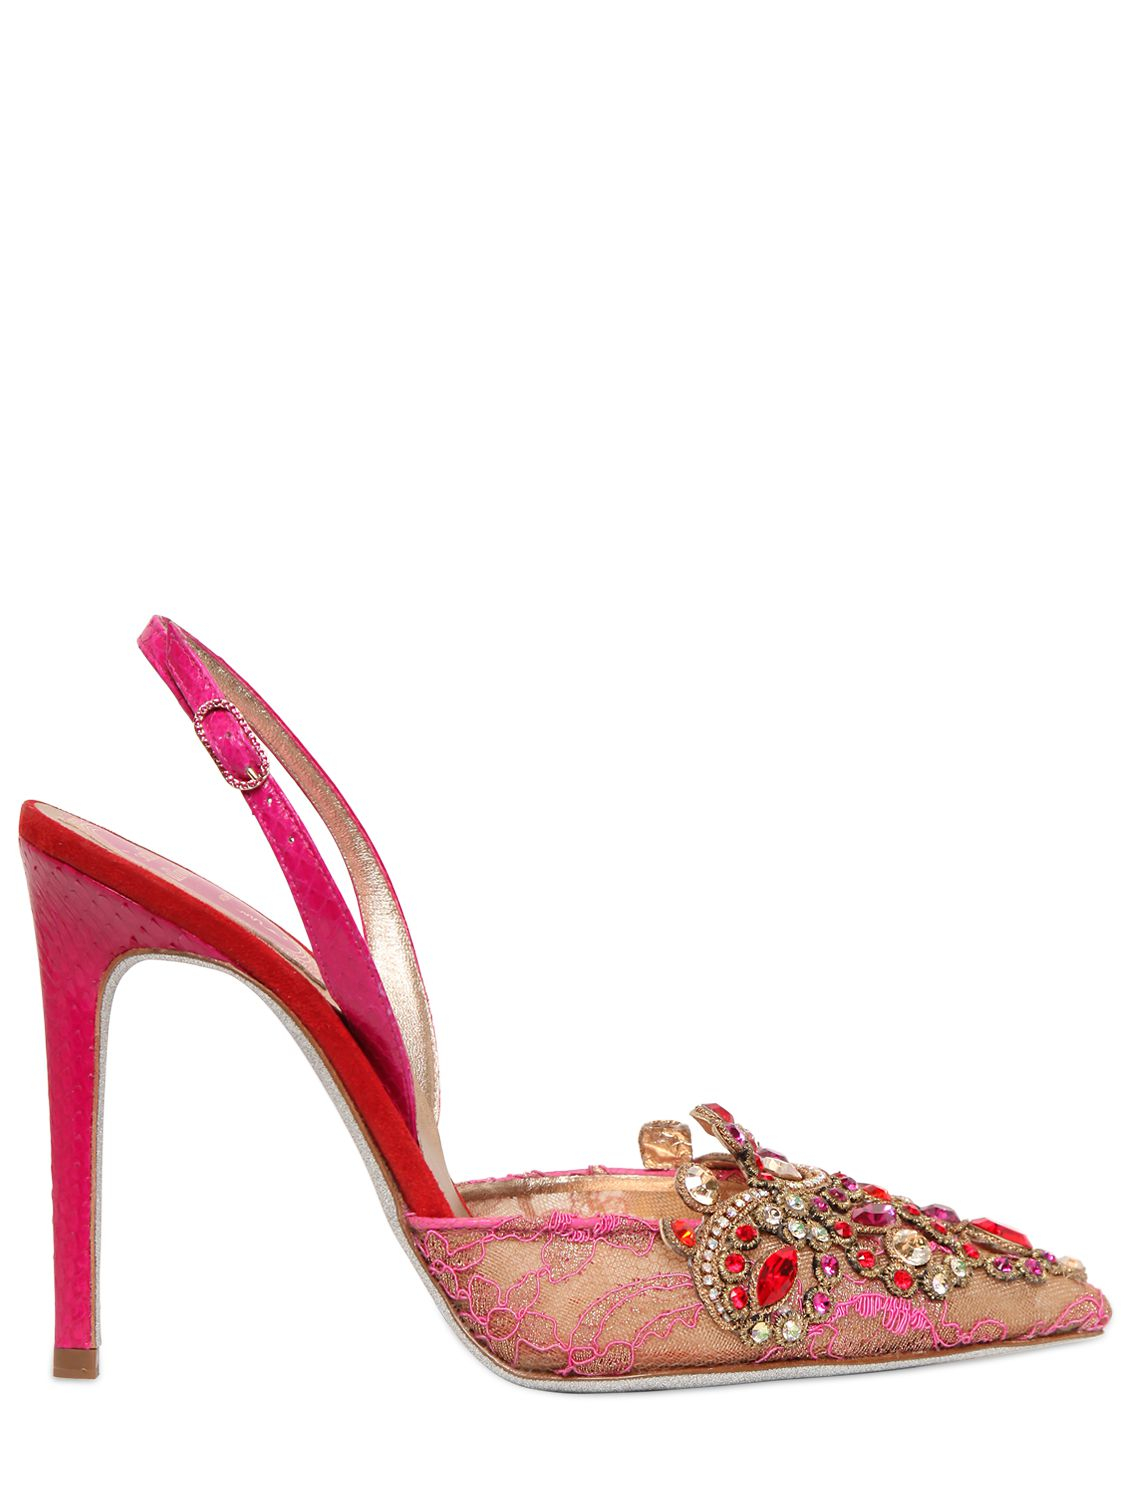 Lyst - Rene Caovilla 105mm Mesh Swarovski Ayers Sandals in Pink